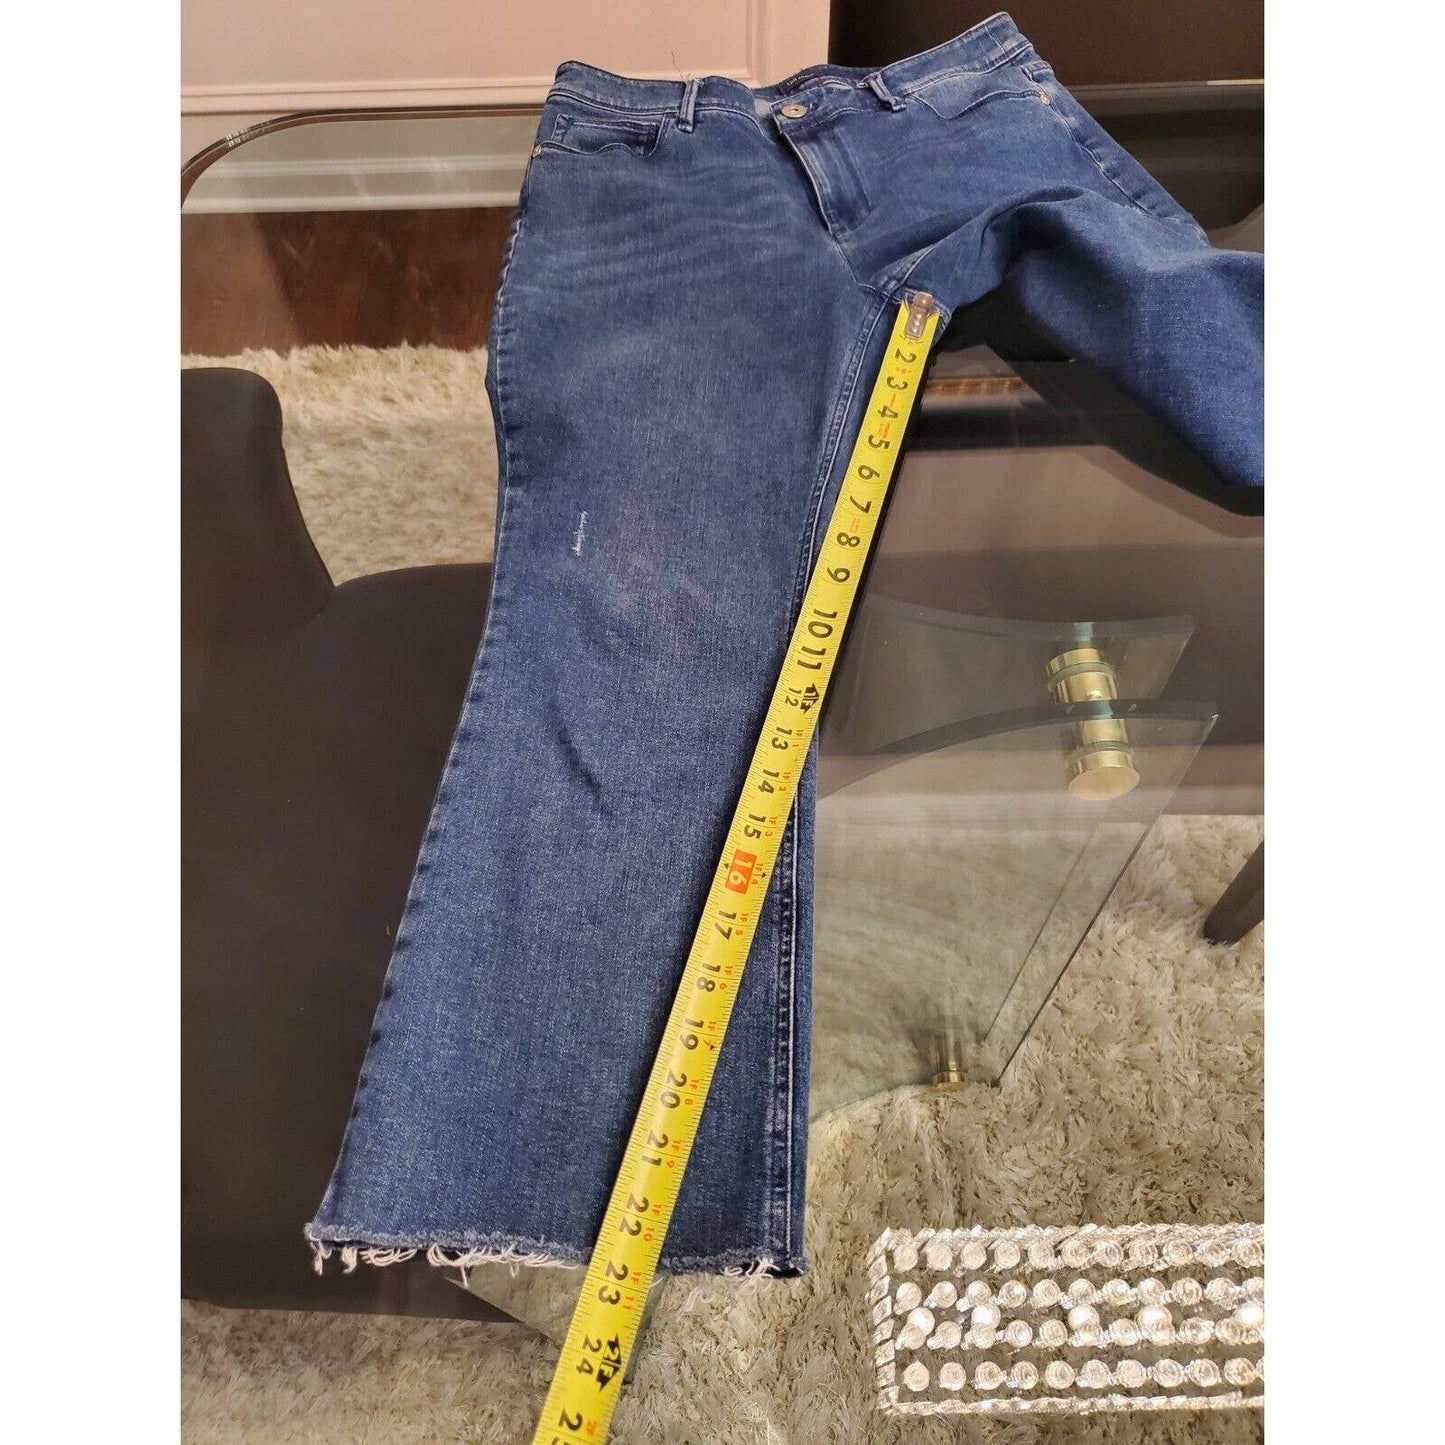 J.Jill Denim Women's Blue Cotton High Rise Zippered Ankle Jeans Pant Size 10